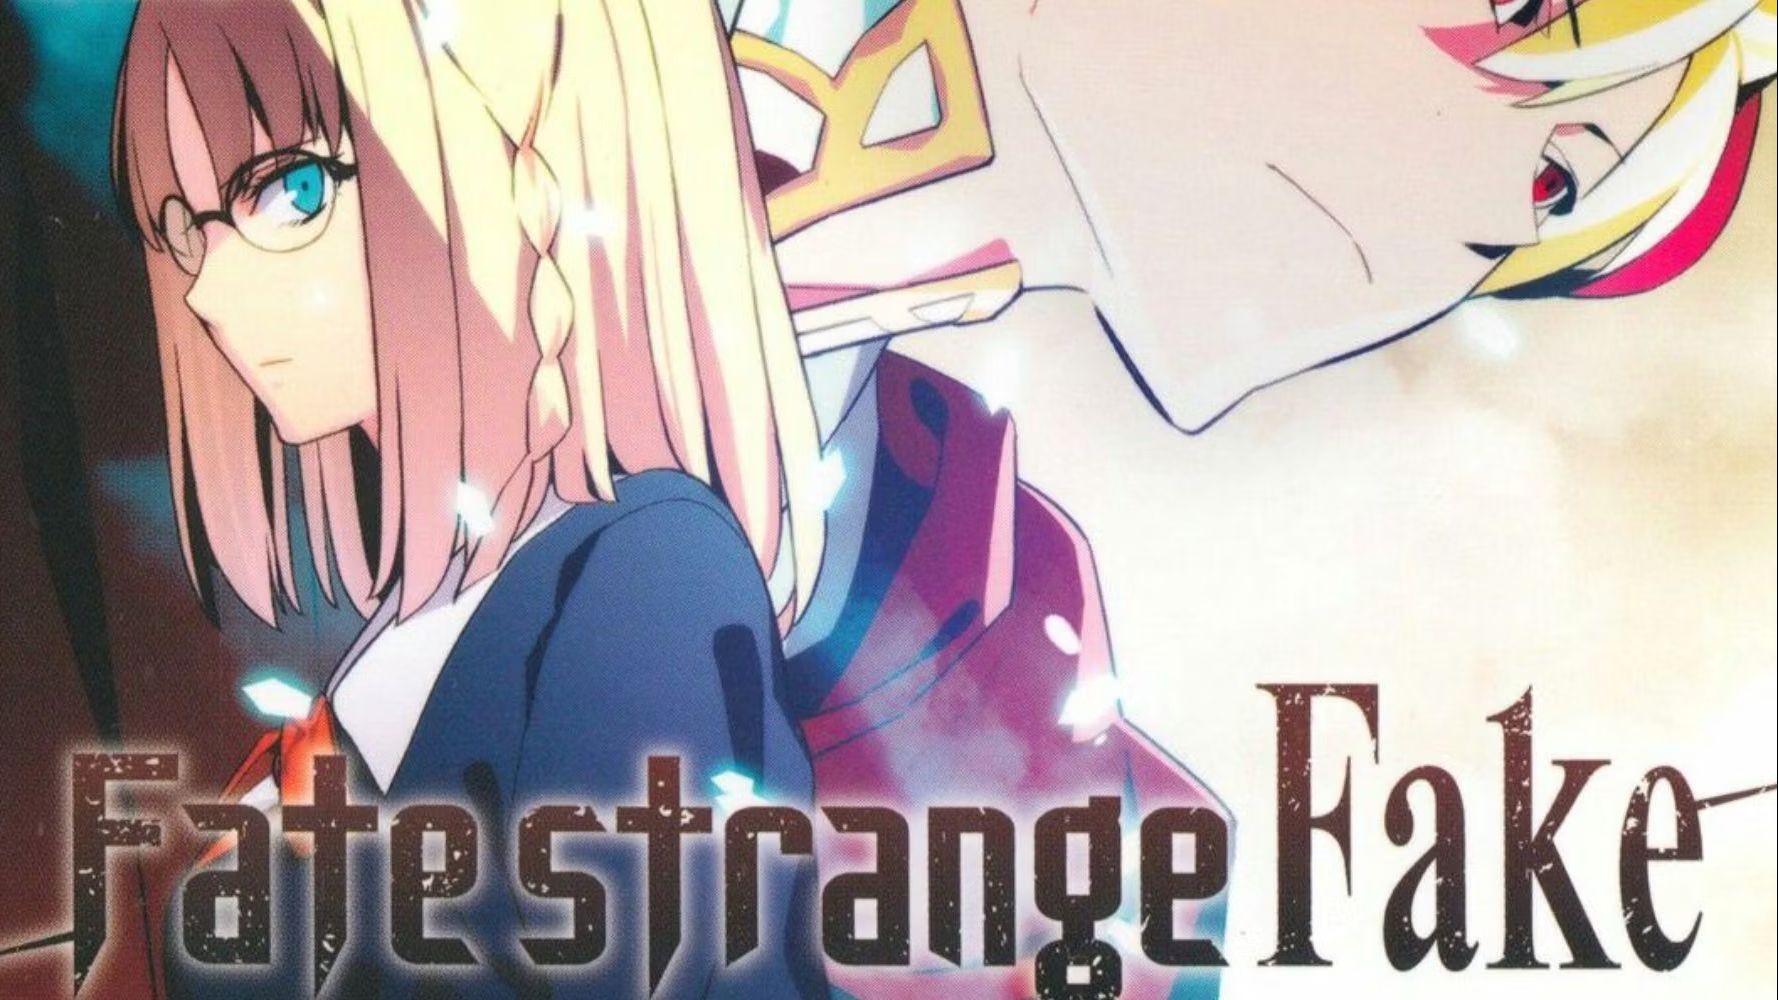 Fate/Strange Fake (English Sub) - BiliBili